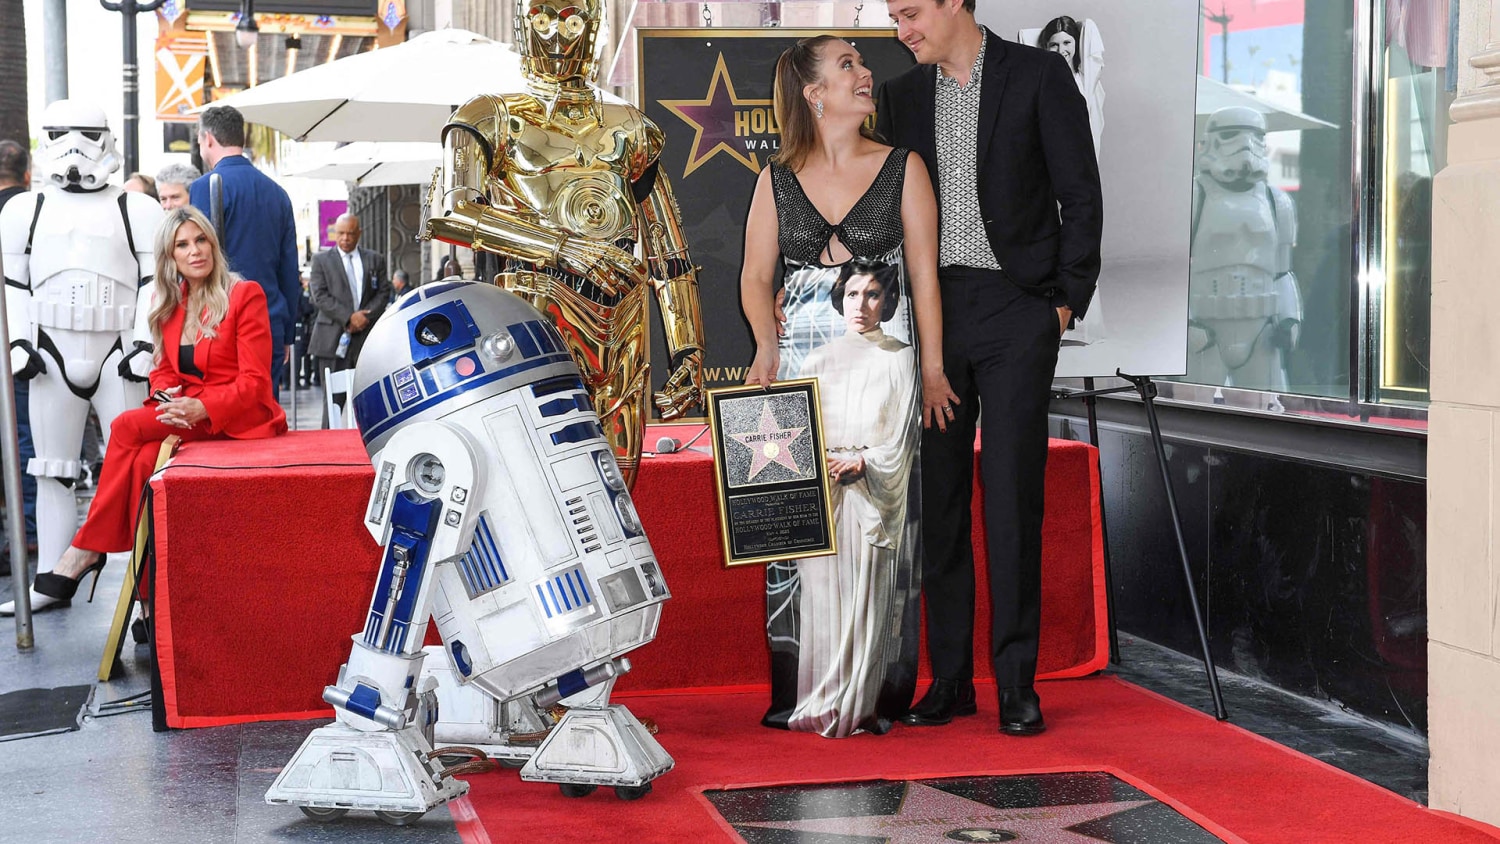 Star Wars' Star Mark Hamill Receives Hollywood Walk of Fame Honor